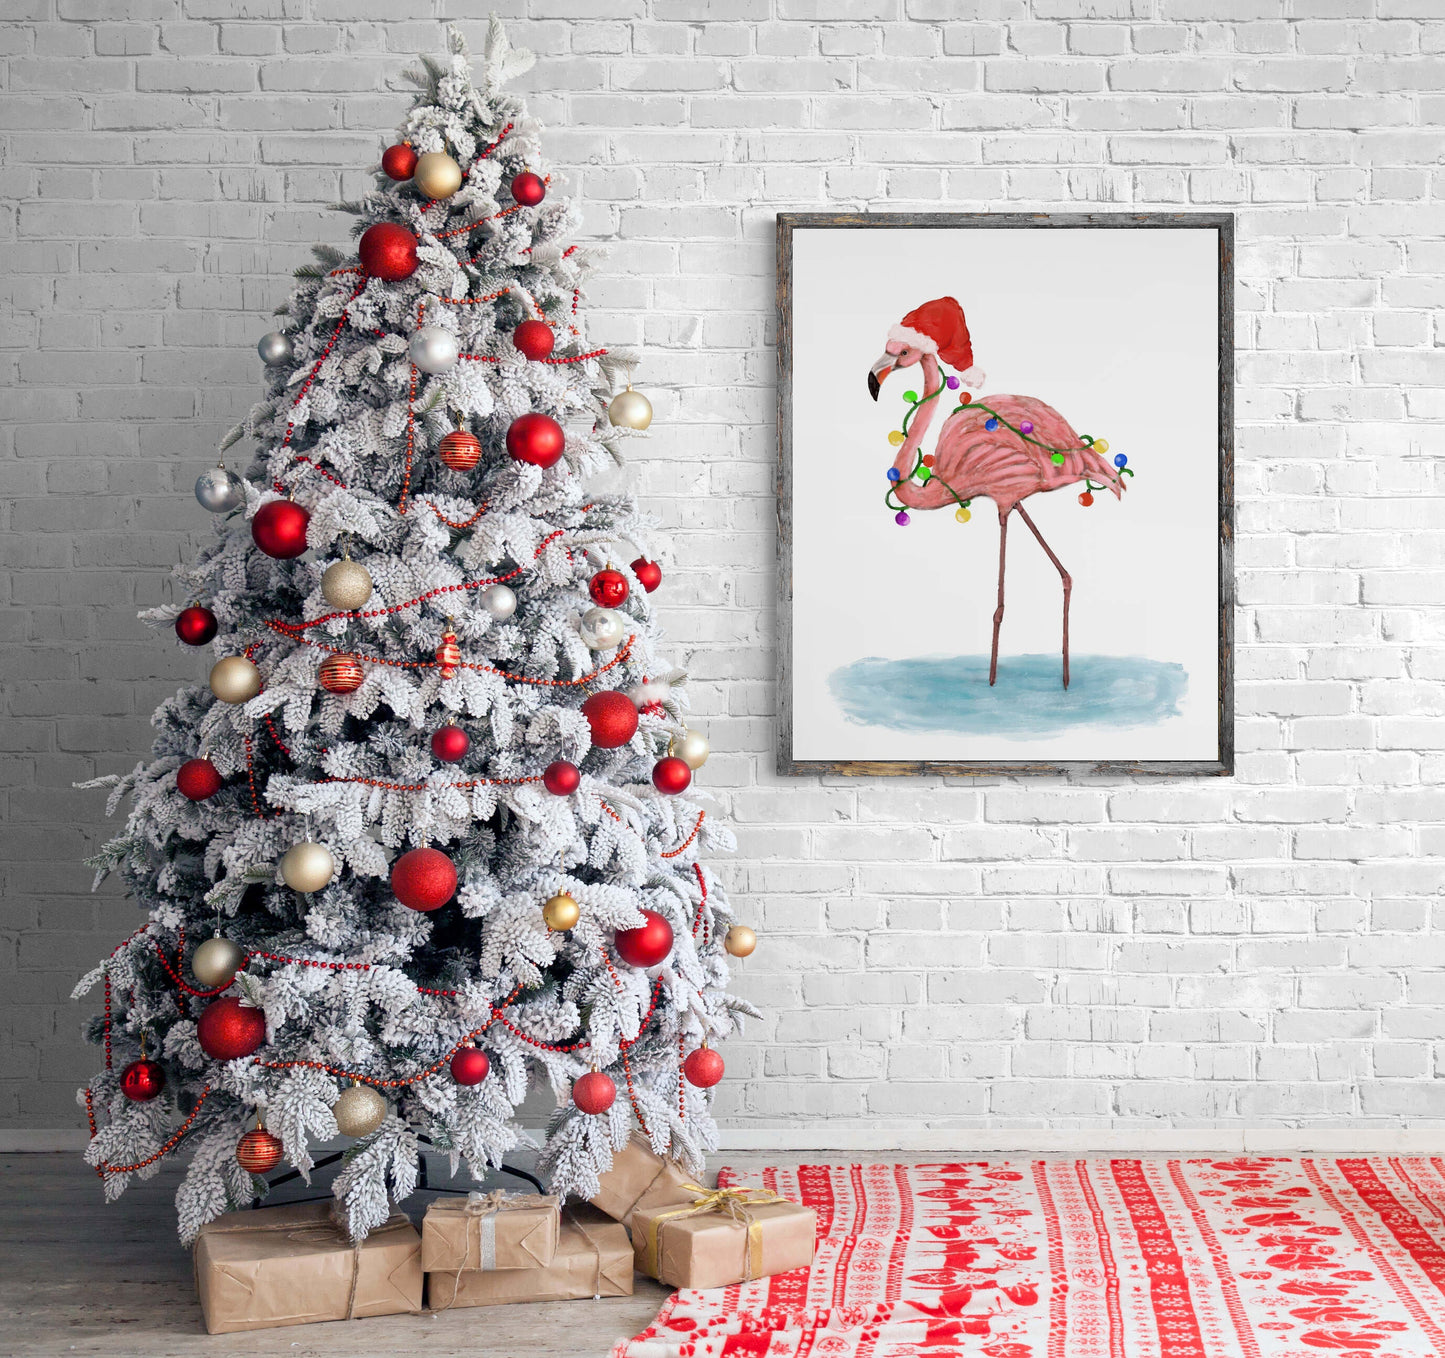 Flamingo with Christmas Lights Print, Winter Artwork, Flamingo Gift, New Years Art, Winter Home Decor, Xmas Flamingo, Unique Wall Art